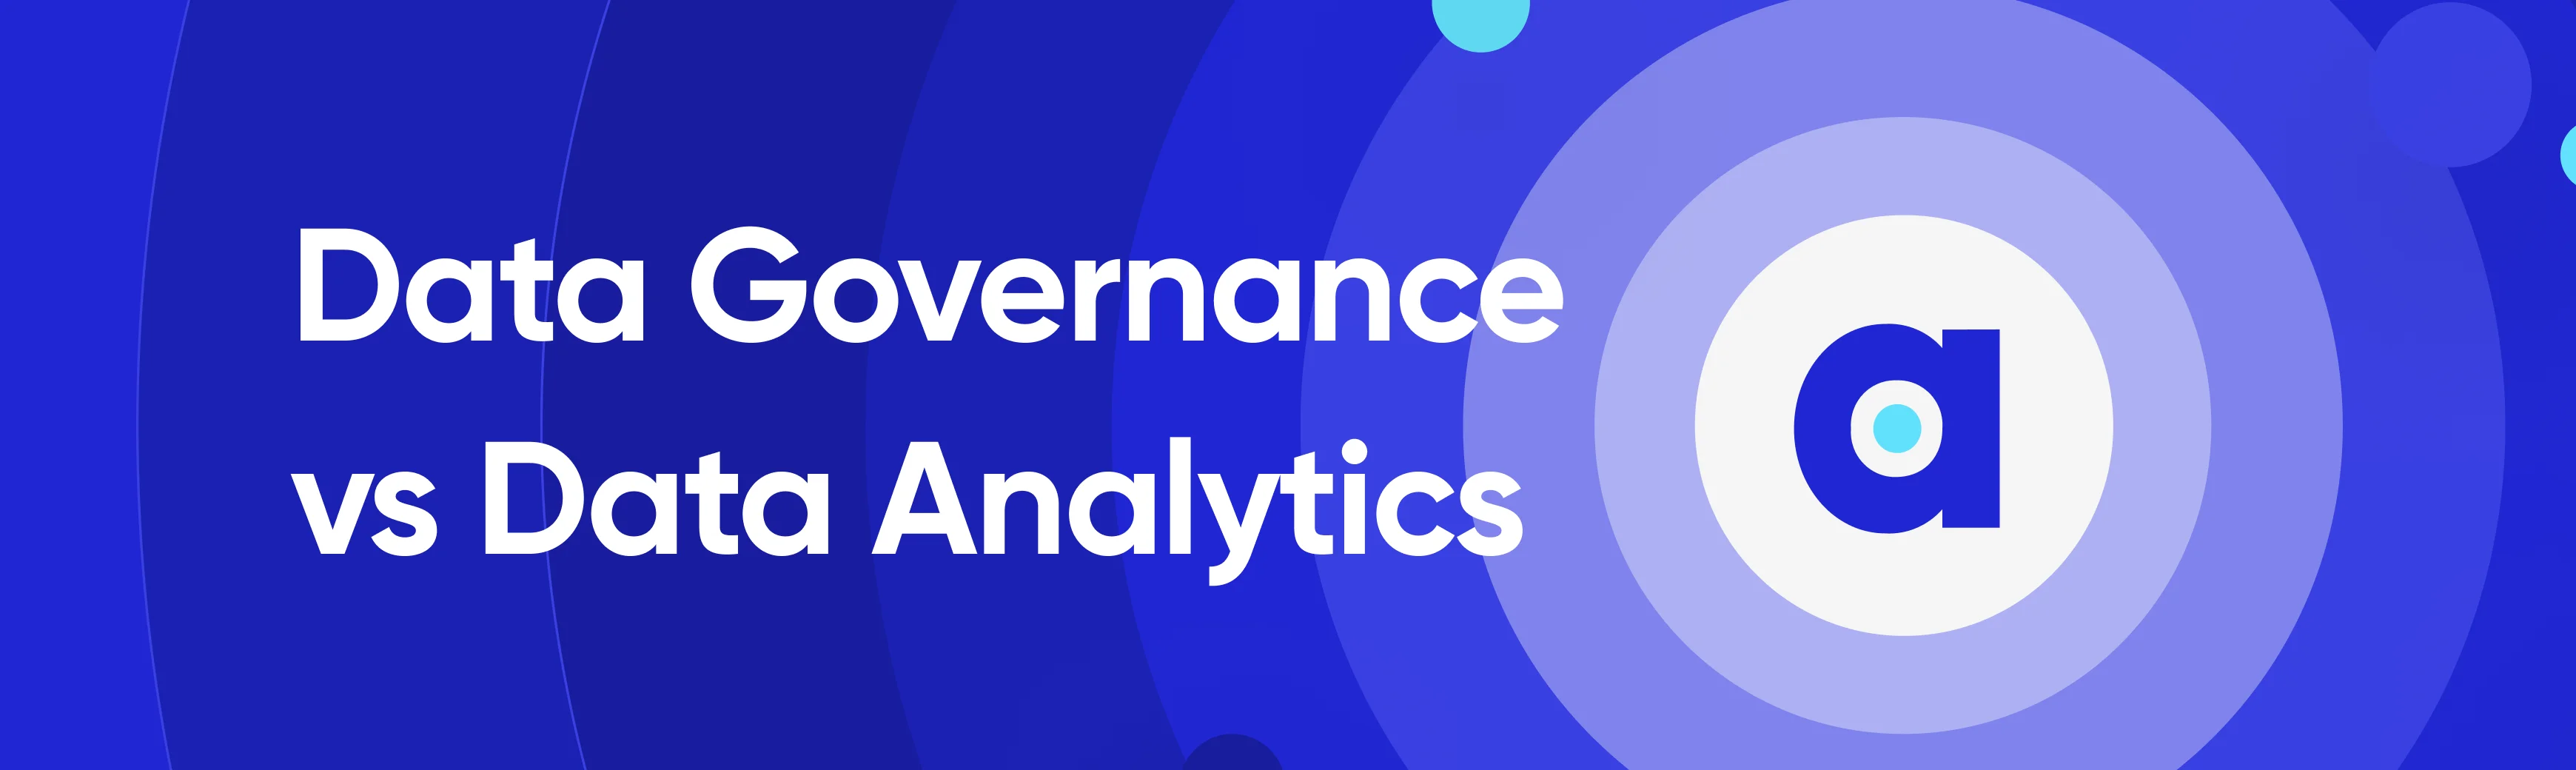 Data Governance vs Data Analytics